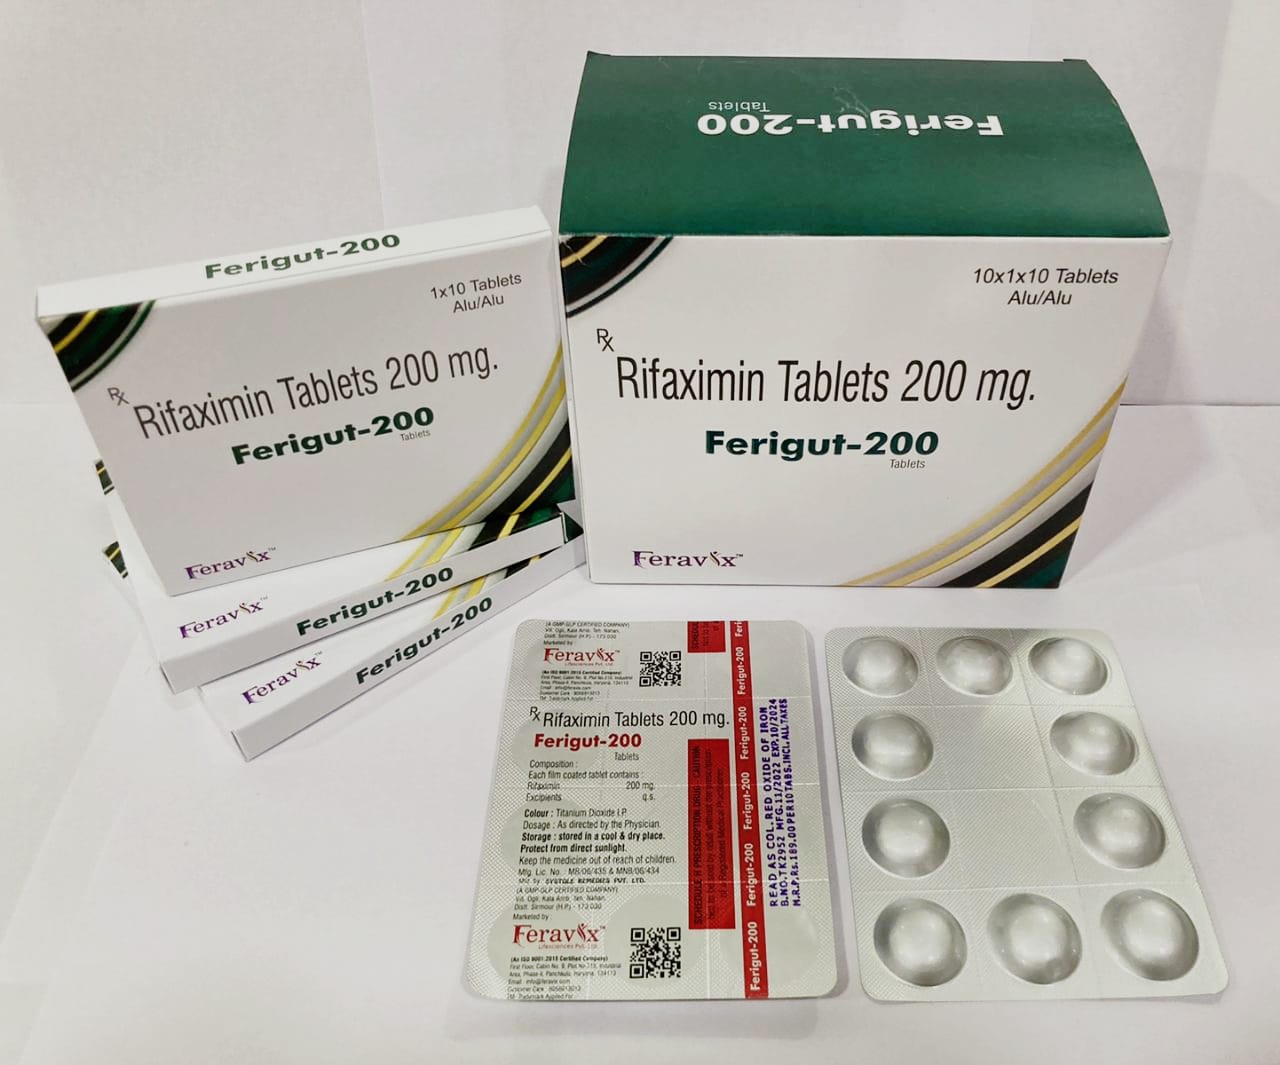 Product Name: FERIGUT 200 Tablets, Compositions of FERIGUT 200 Tablets are RIFAXIMIN 200MG - Feravix Lifesciences